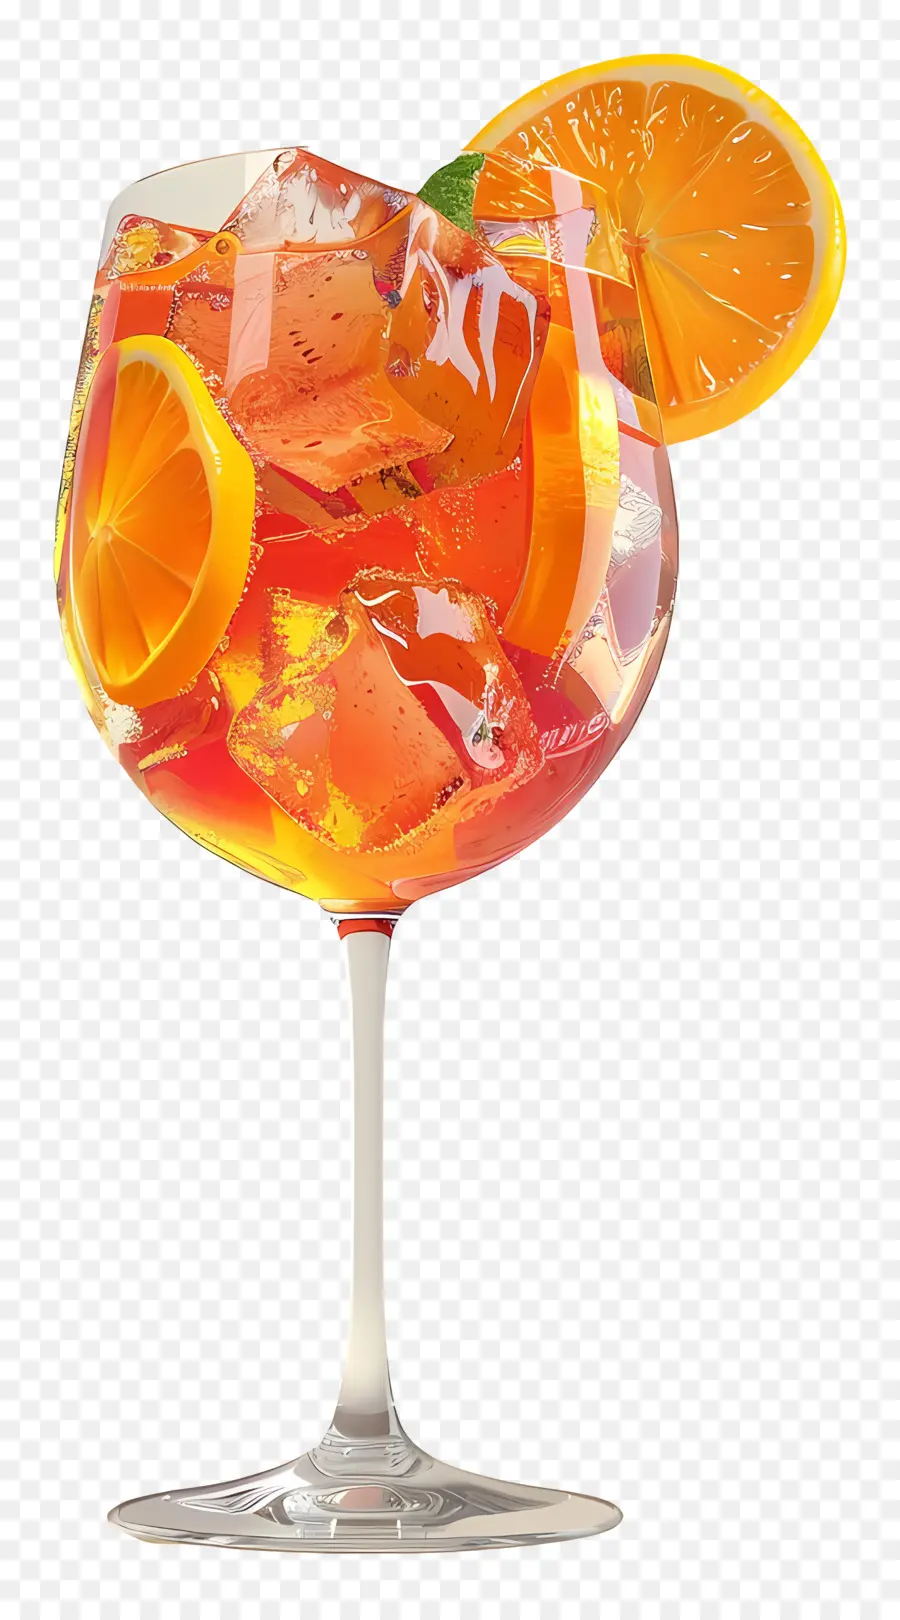 aperolo bevanda arancione foglie di menta fetta di bicchiere d'acqua arancione - Bicchiere di bevanda arancione con foglie di menta